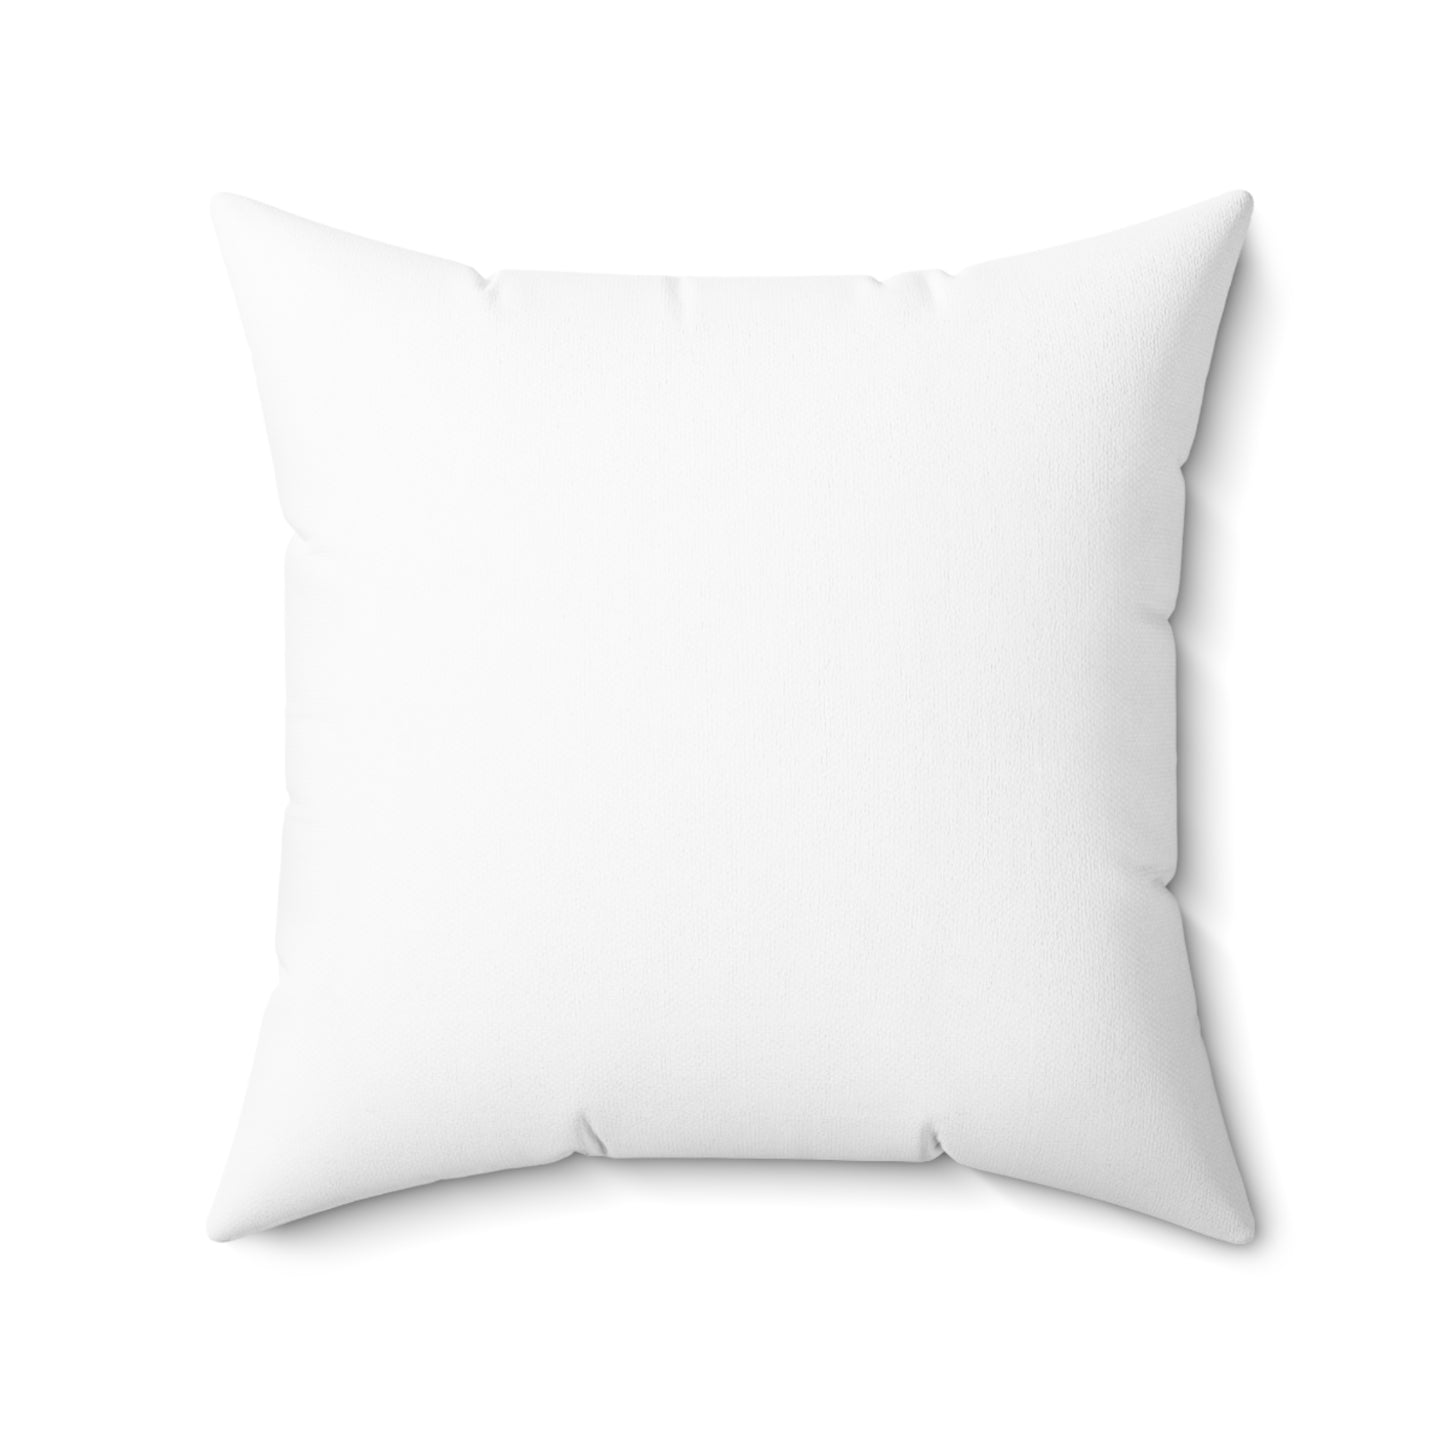 The Good Luck Spun Polyester Square Pillow 🍀